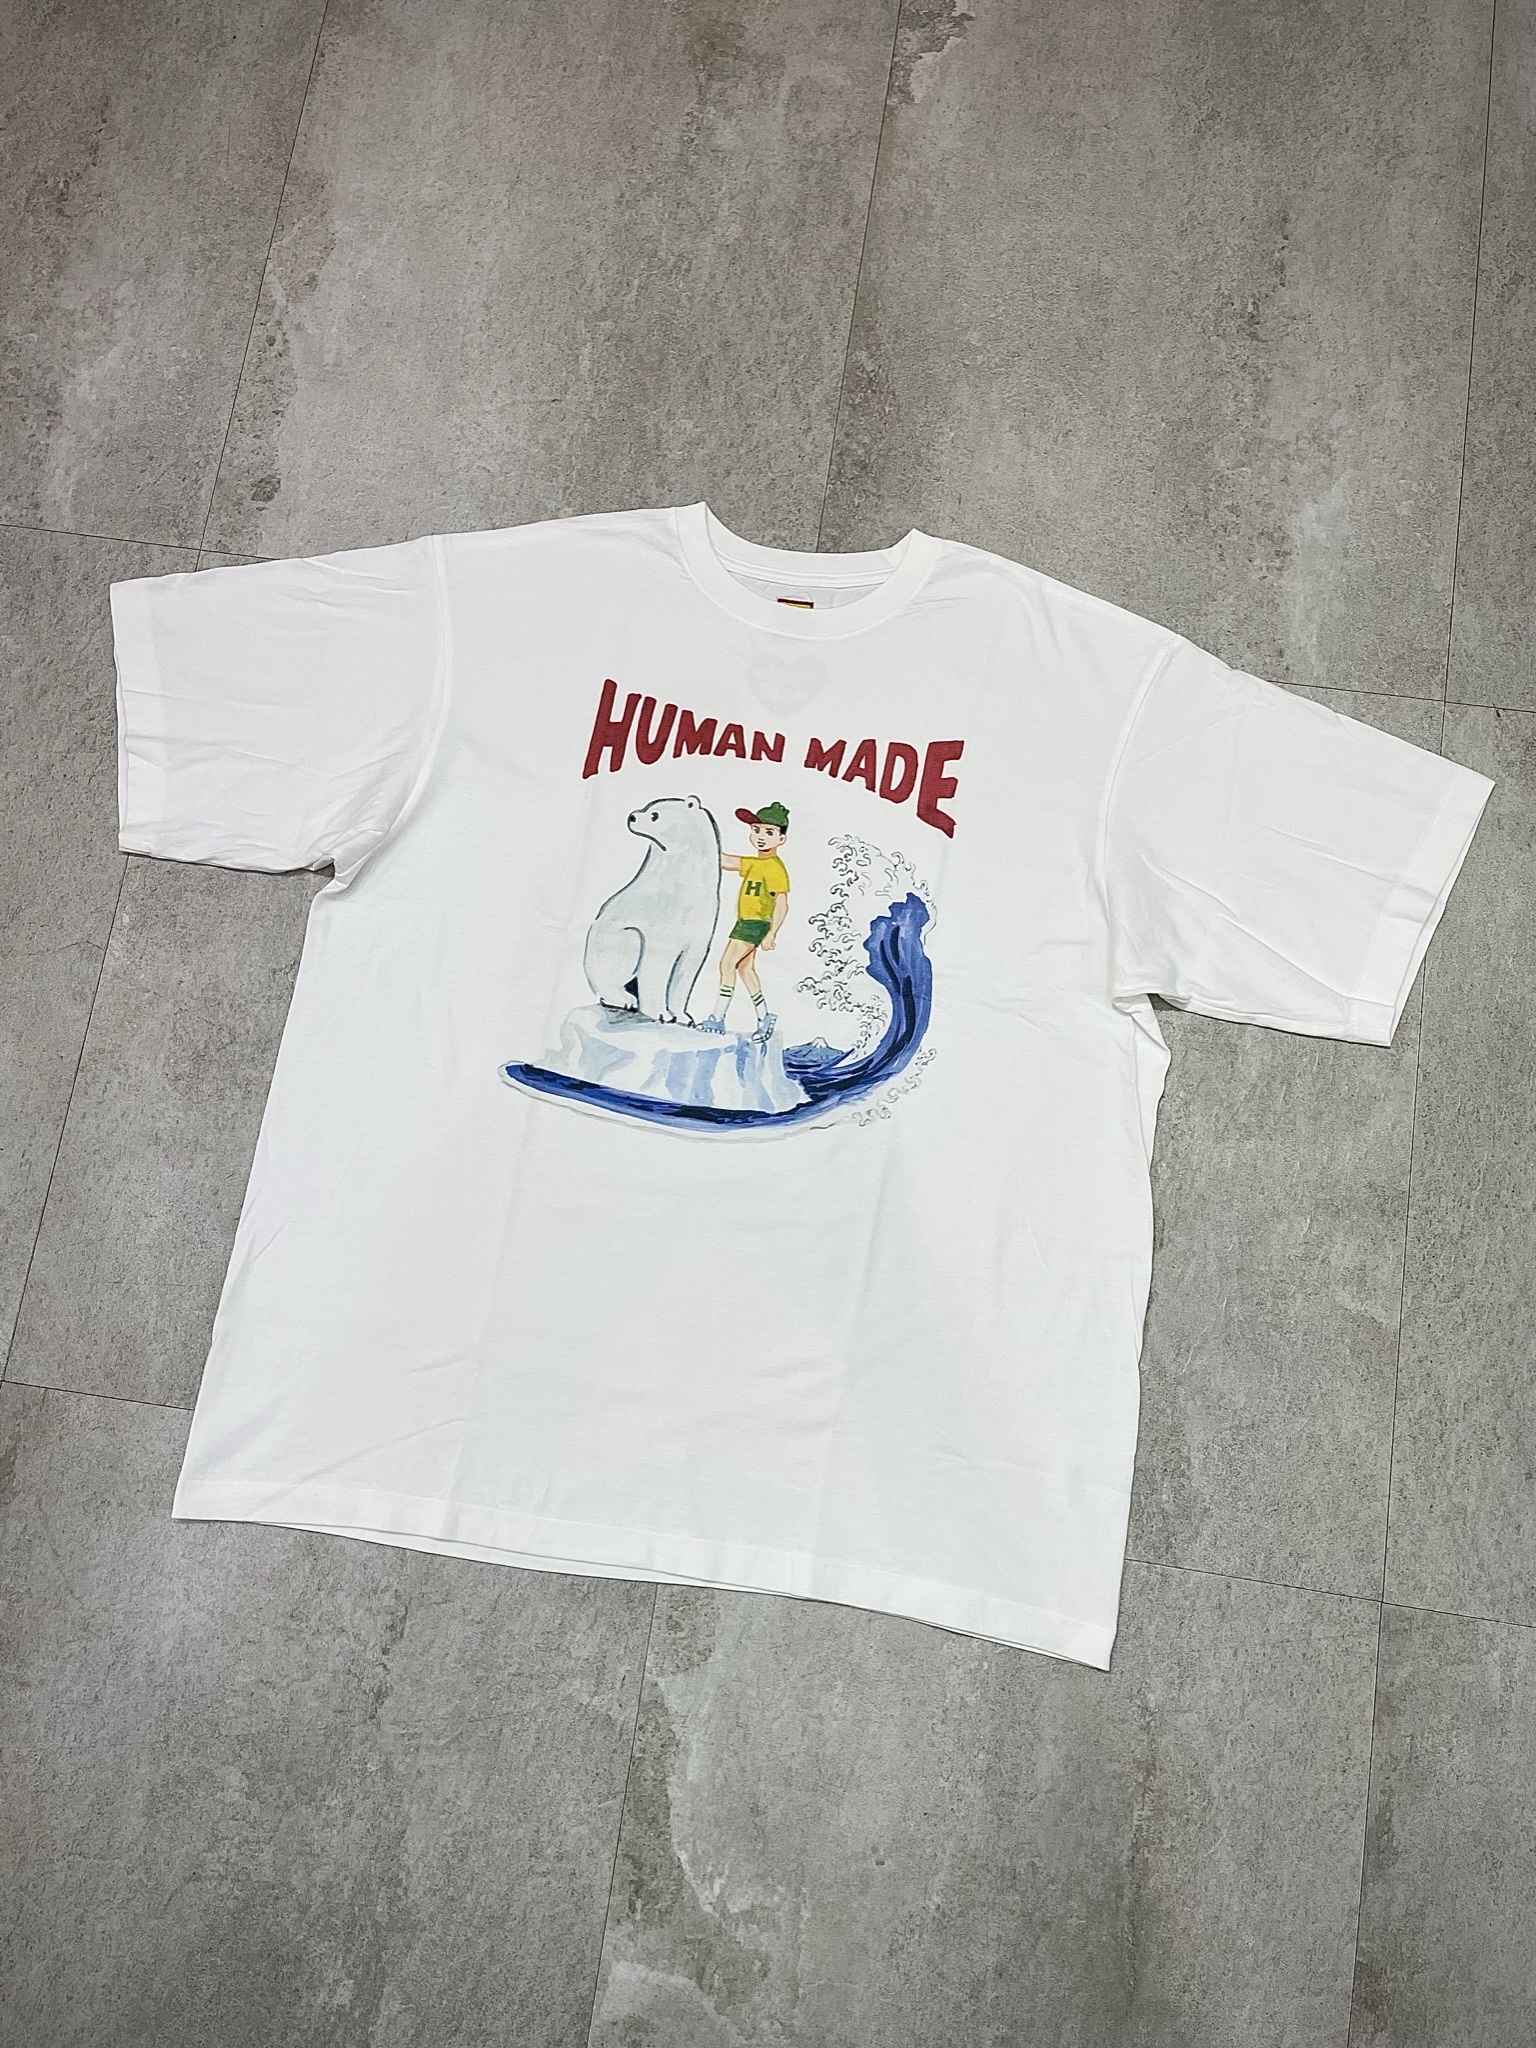 Human Made X Keiko Sootome T Shirt 8417